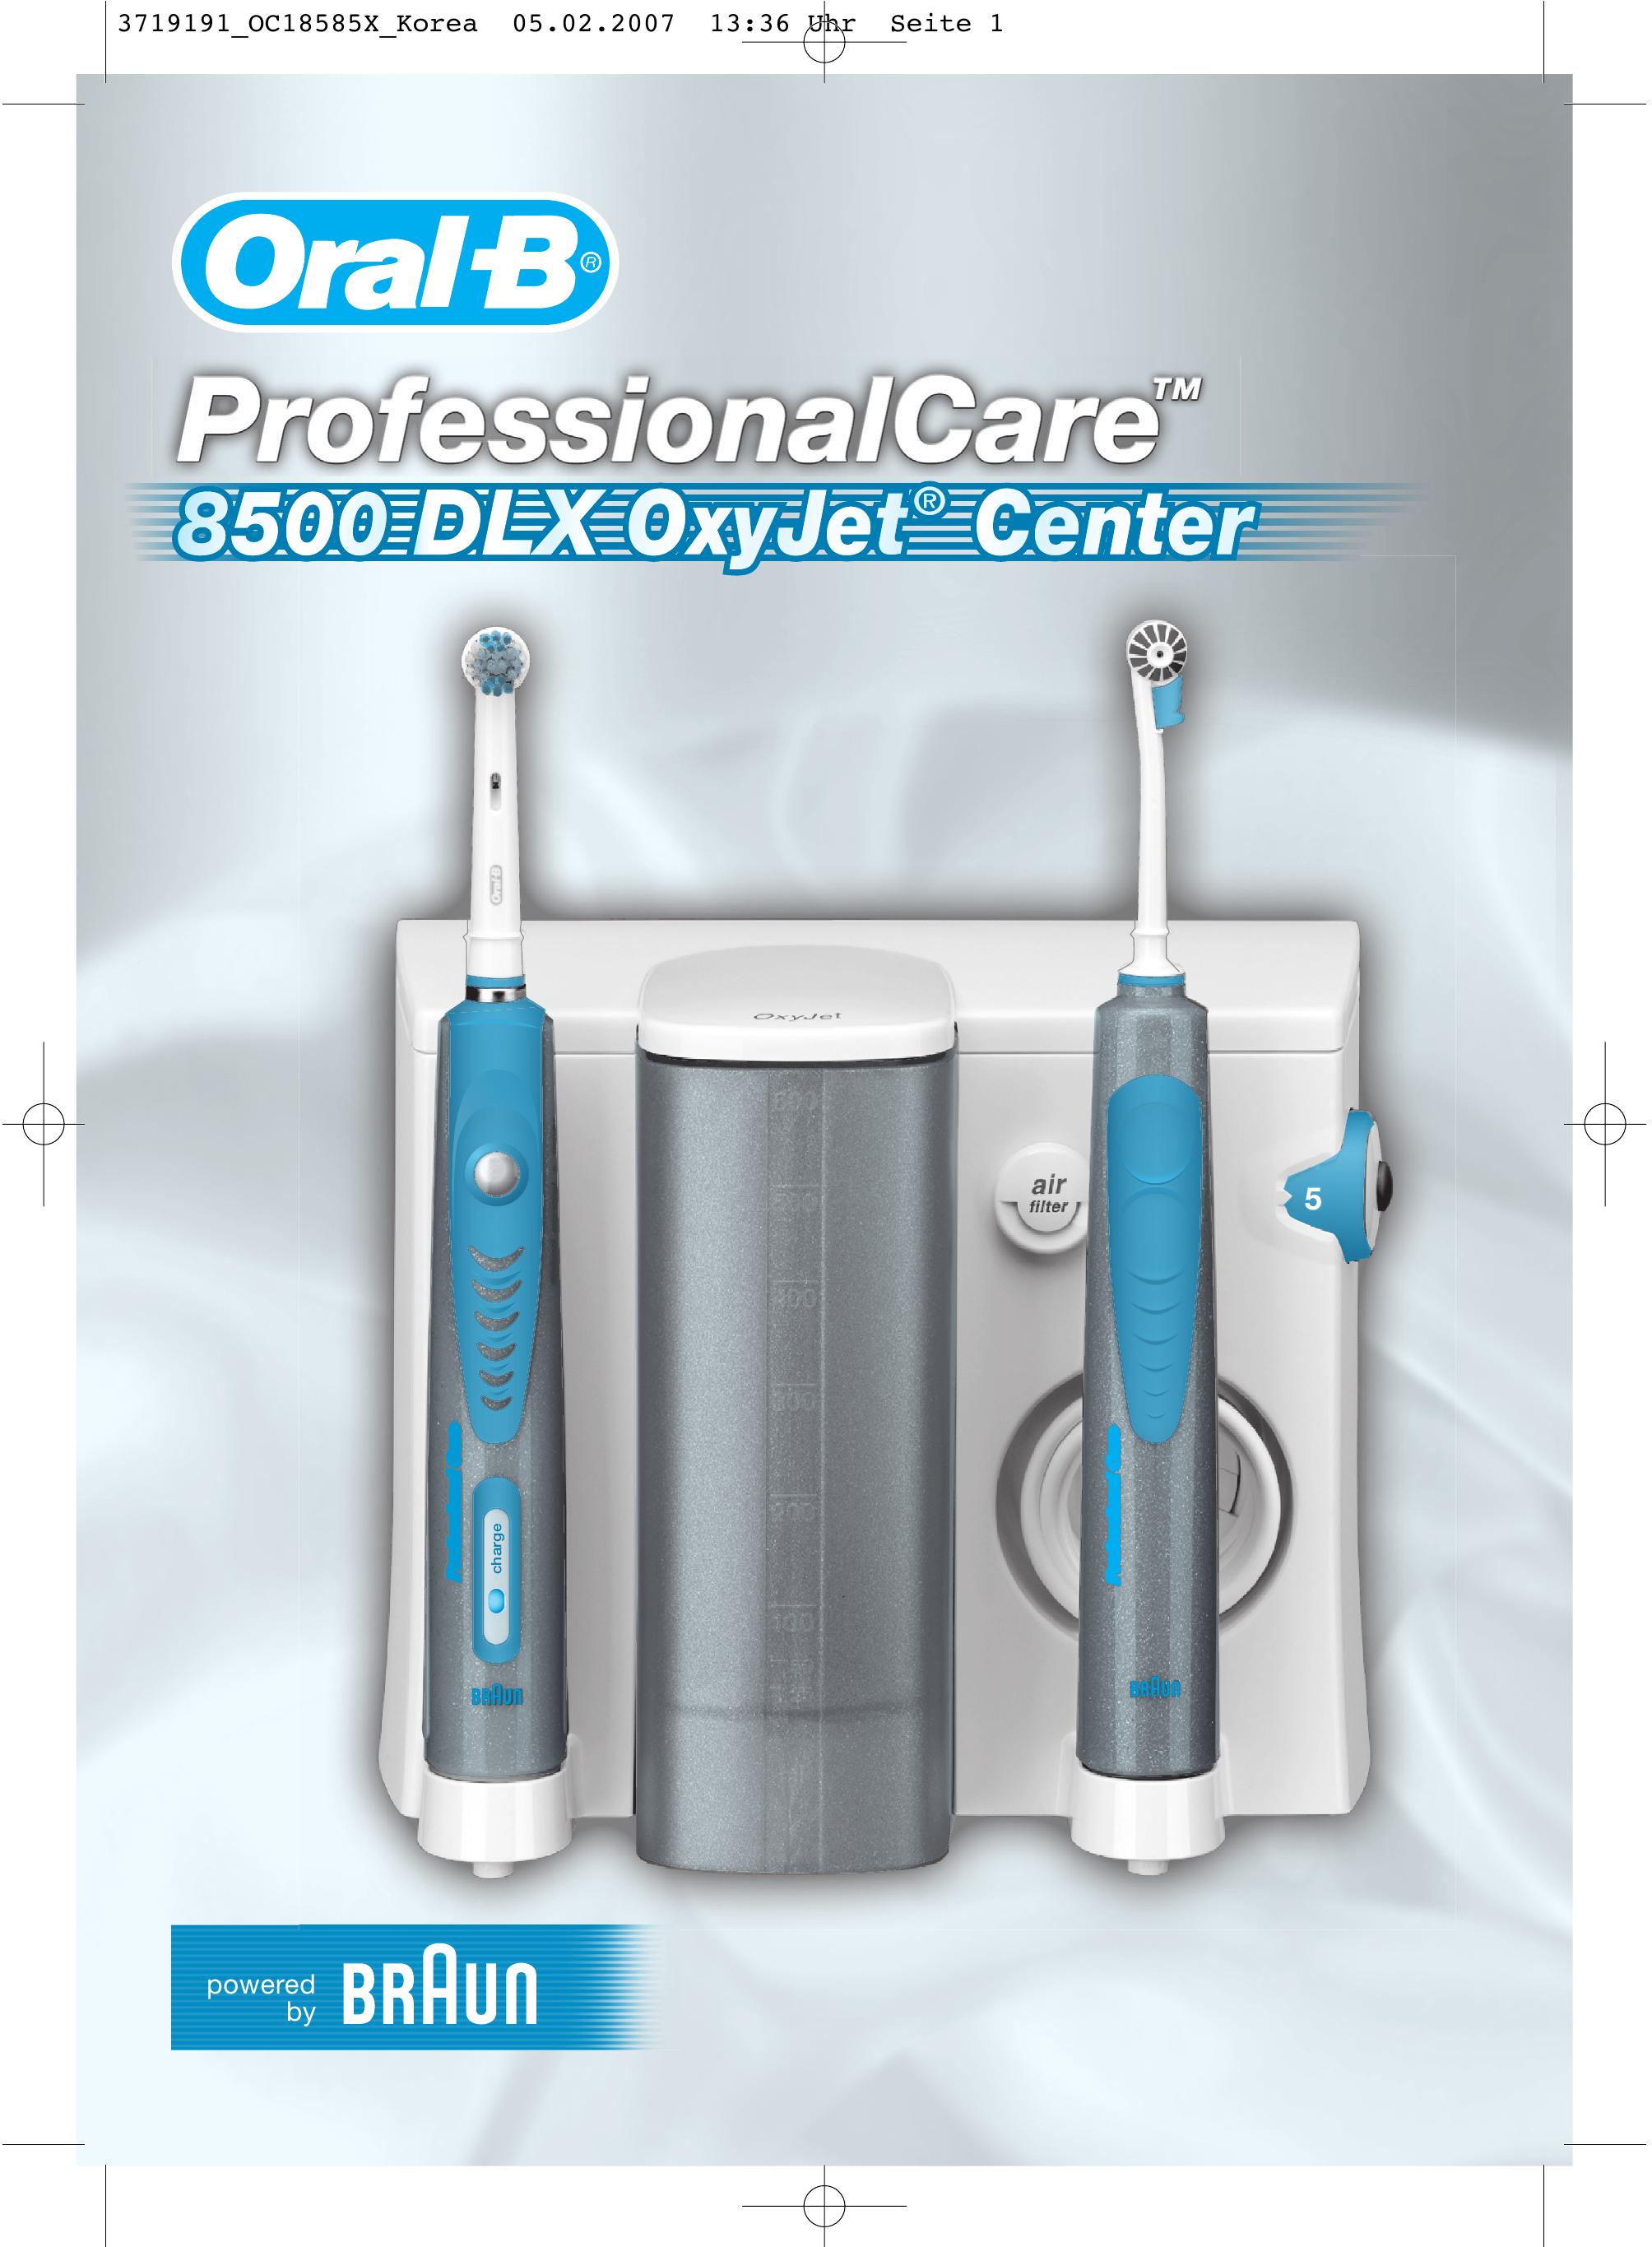 Braun 8500 DLX OxyJet Electric Toothbrush User Manual